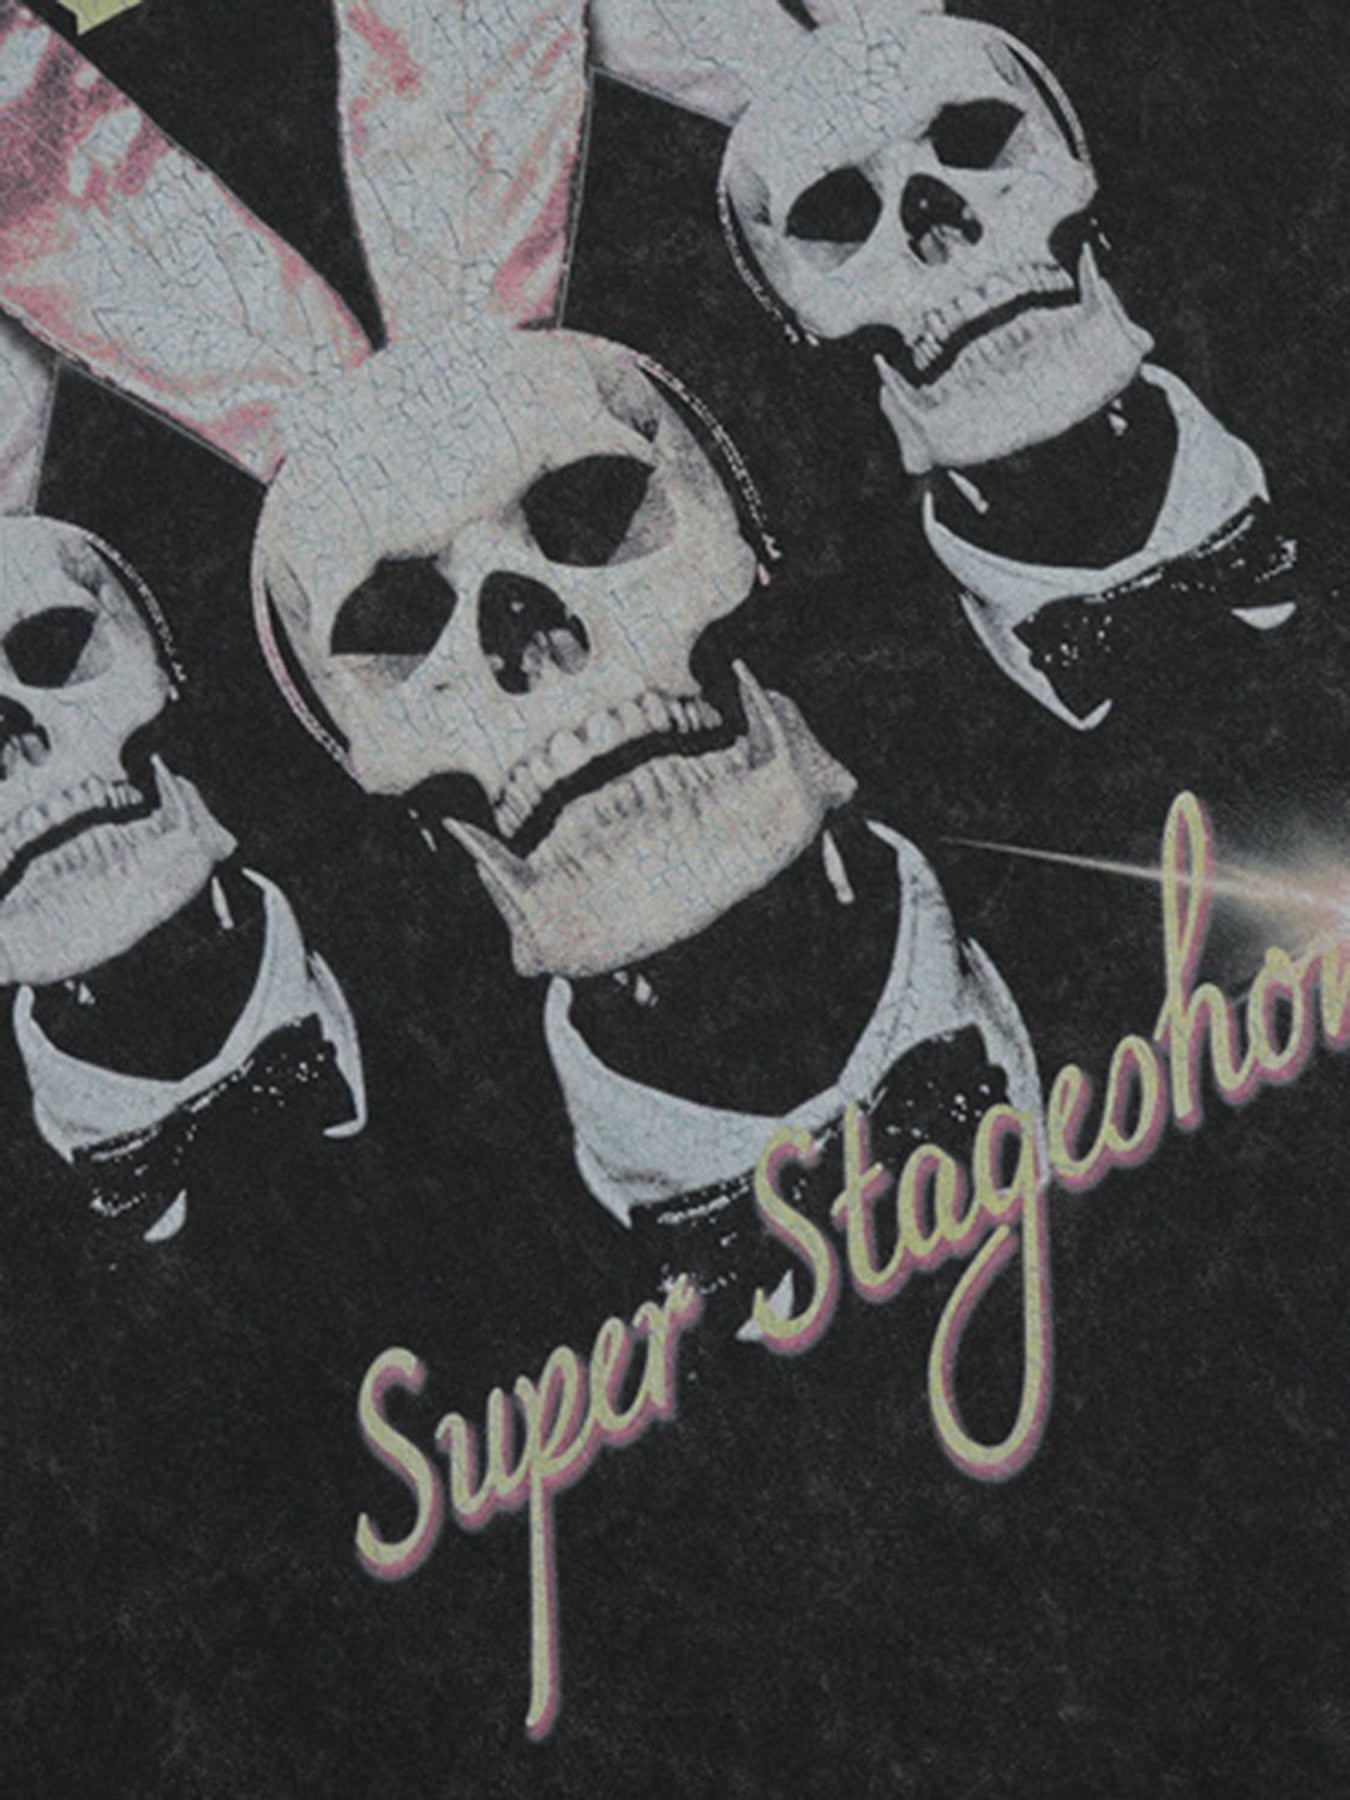 The Supermade Skull Print T-shirt